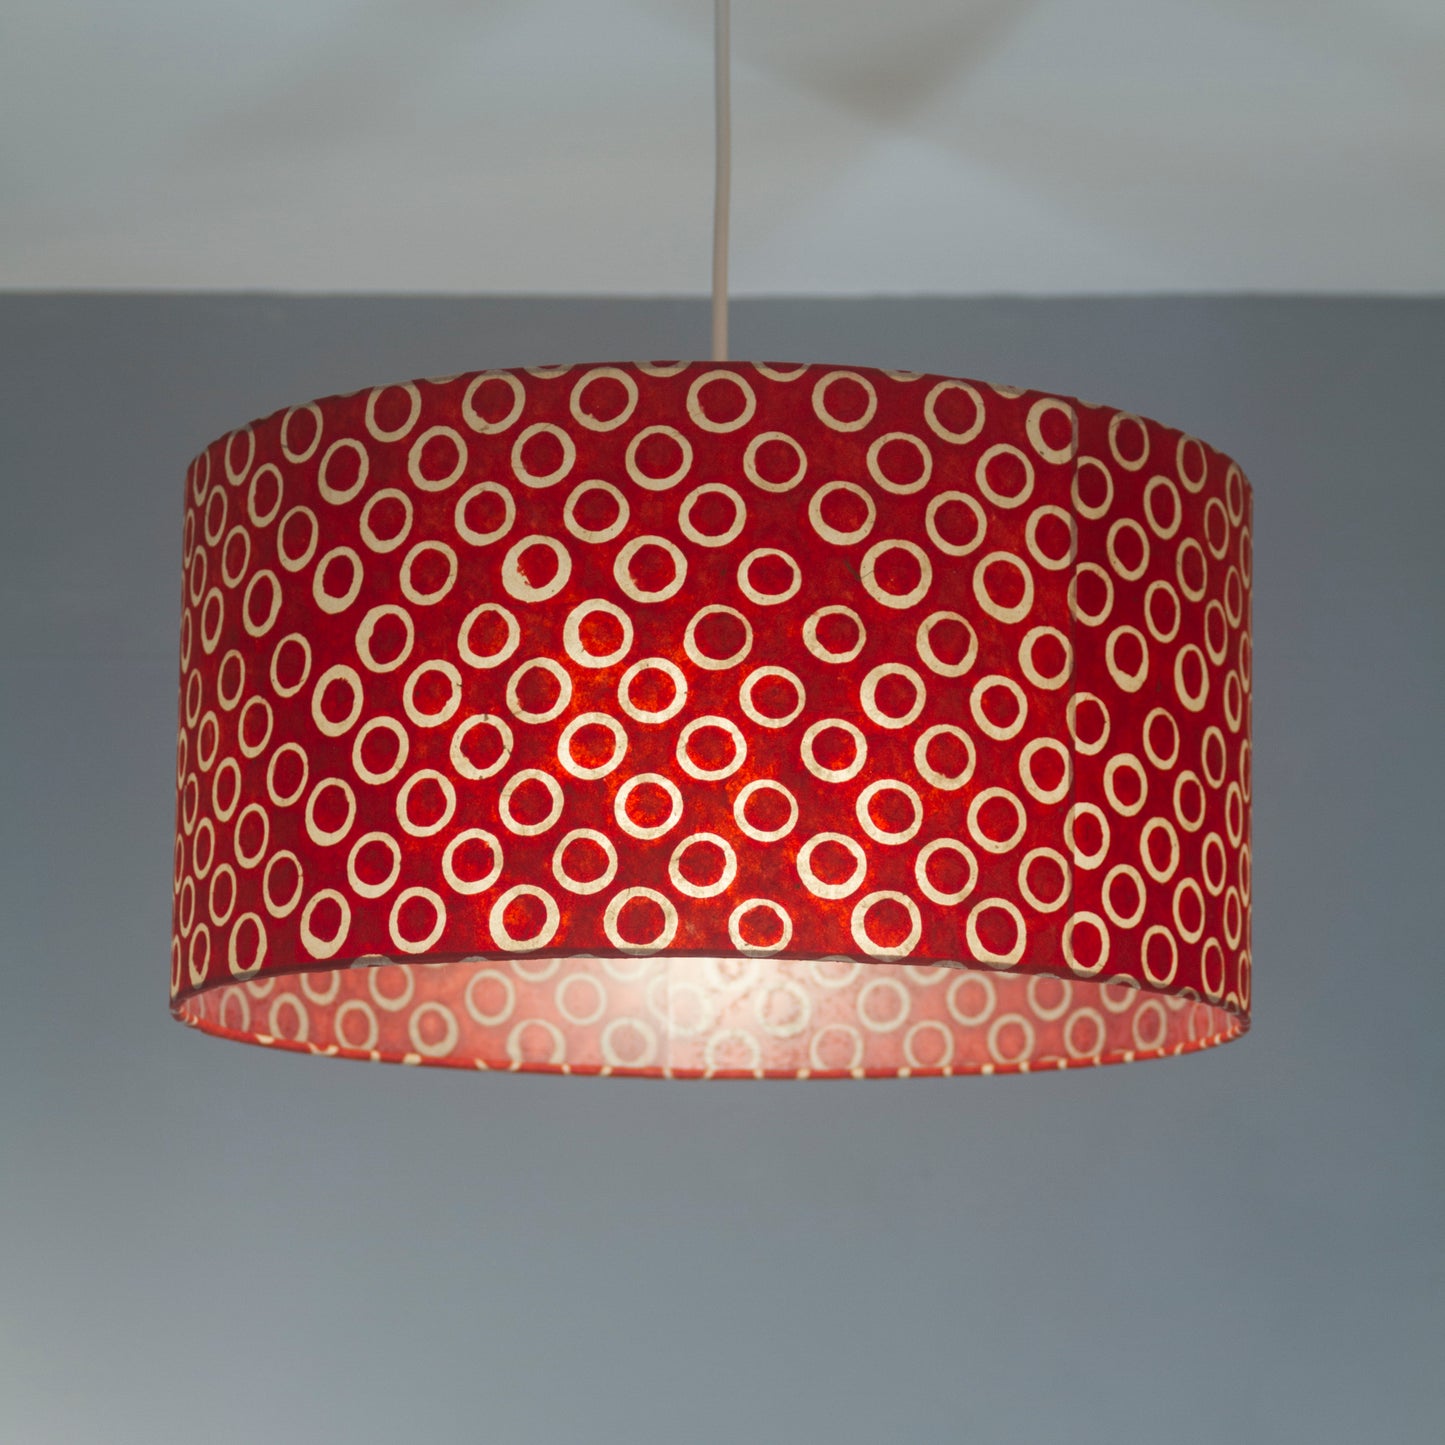 Free Standing Table Lamp Small - P83 ~ Batik Red Circles